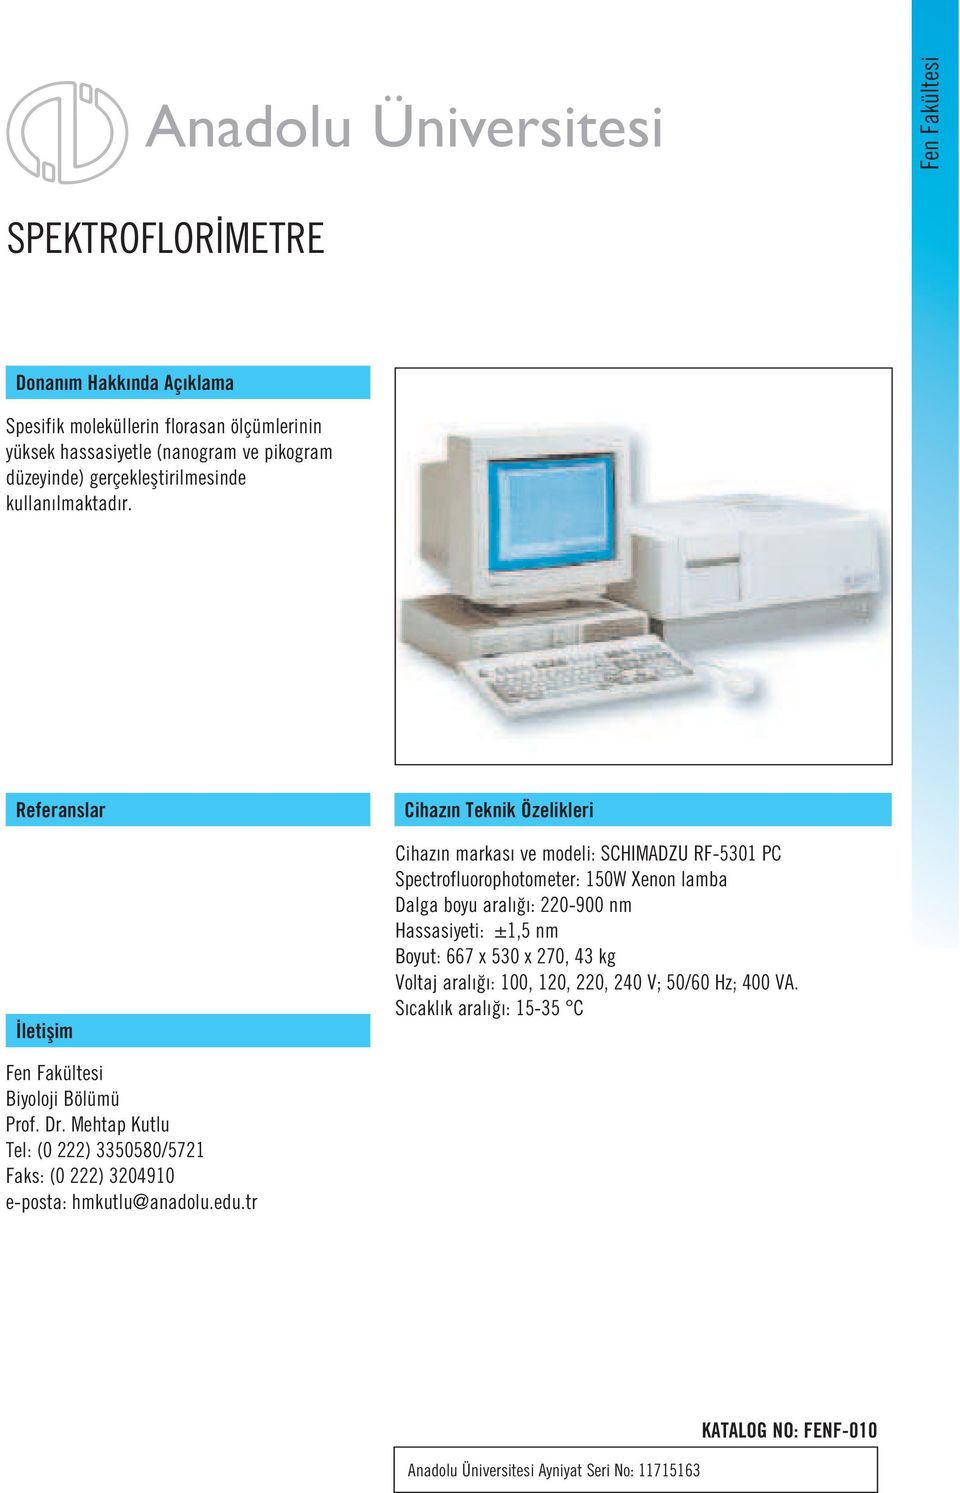 Cihaz n markas ve modeli: SCHIMADZU RF-5301 PC Spectrofluorophotometer: 150W Xenon lamba Dalga boyu aral : 220-900 nm Hassasiyeti: ±1,5 nm